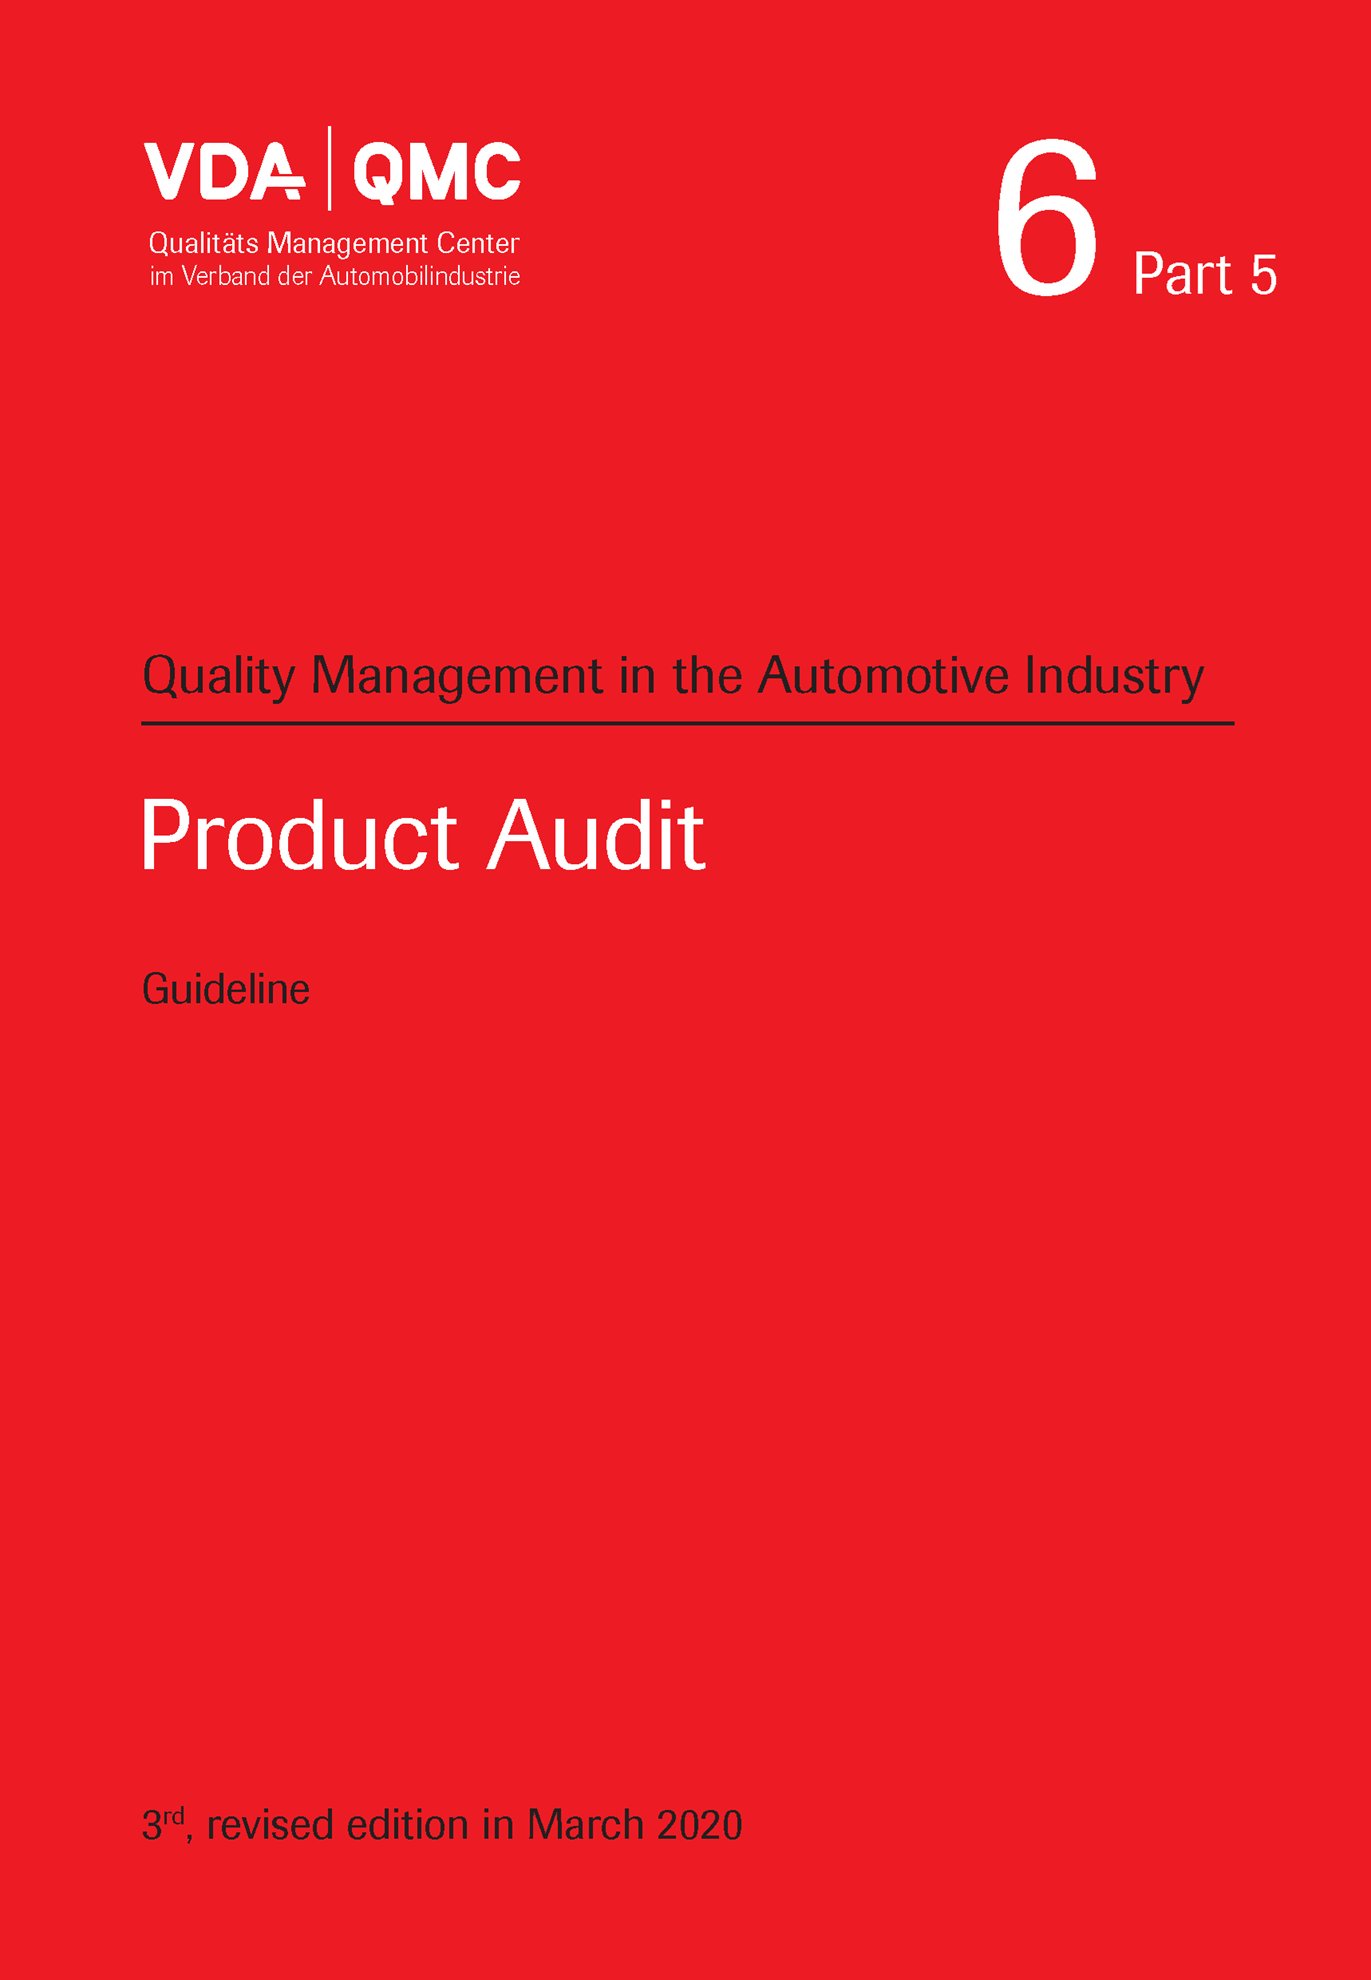 Publikace  VDA Volume 6 Part 5 - Product Audit, 3rd, revised edition, March 2020 1.3.2020 náhled